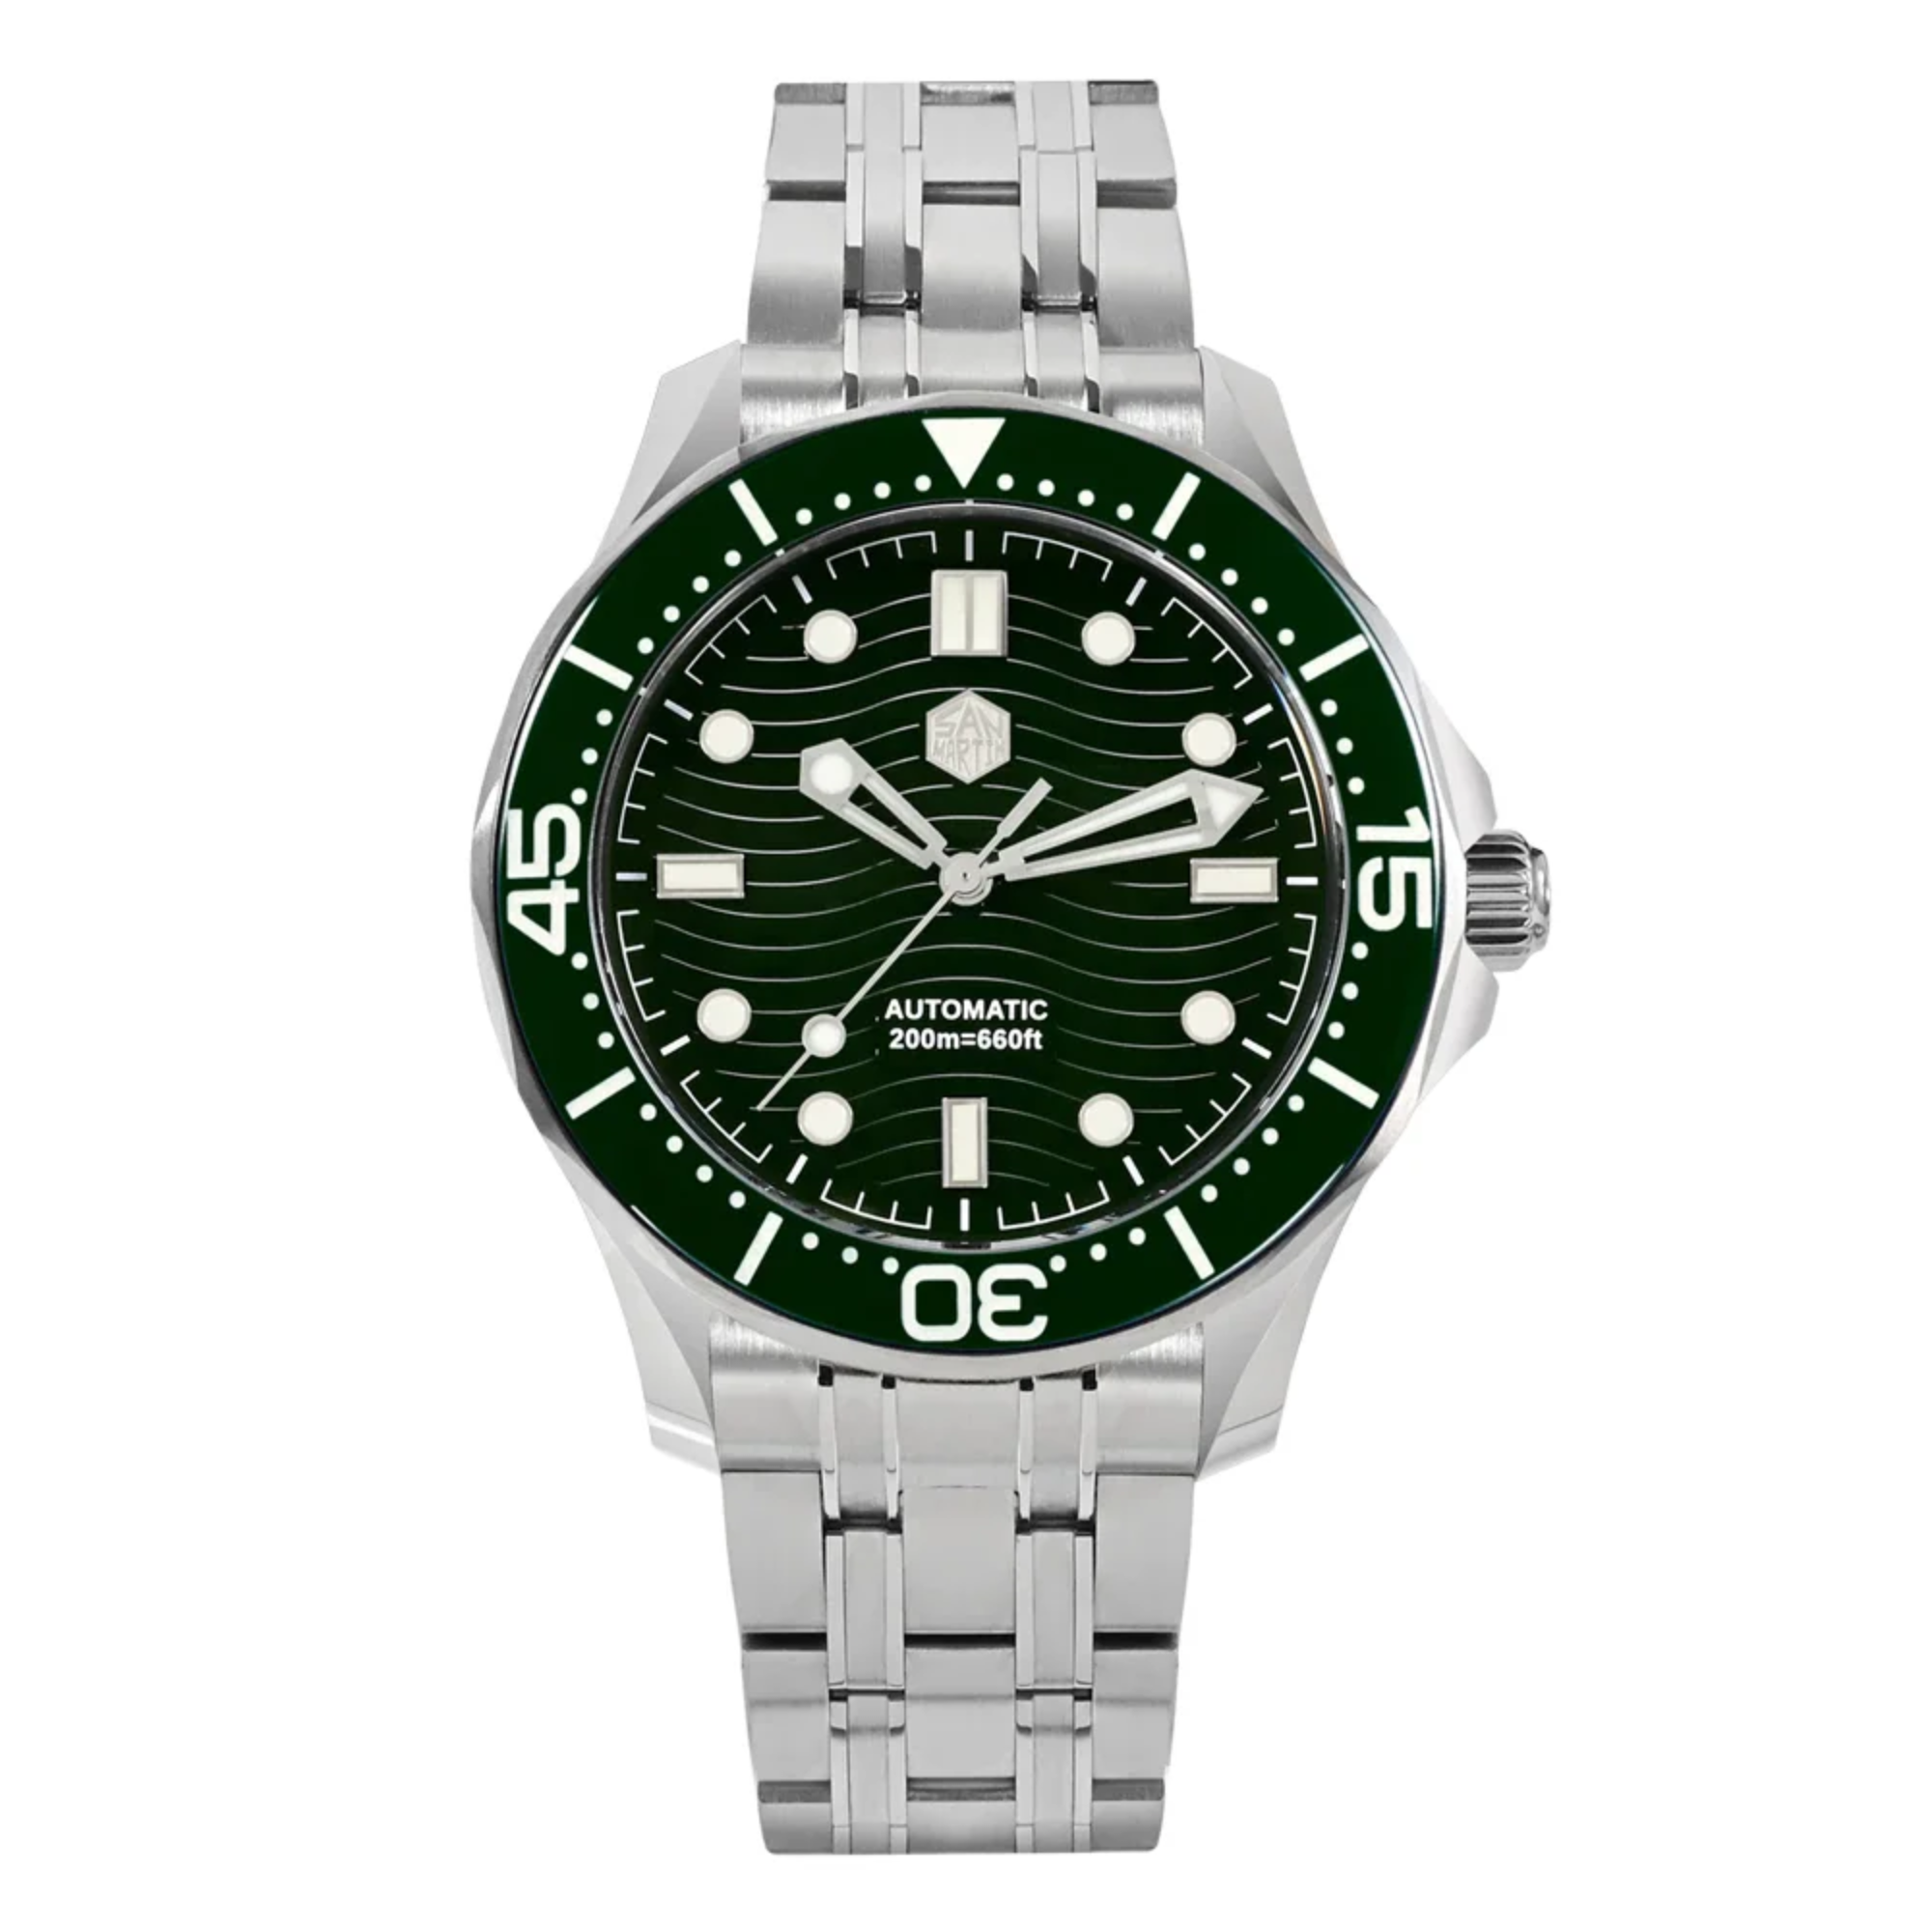 San Martin Sea Ghost Diving Watch SN0088G2 - Green san martin watches india online